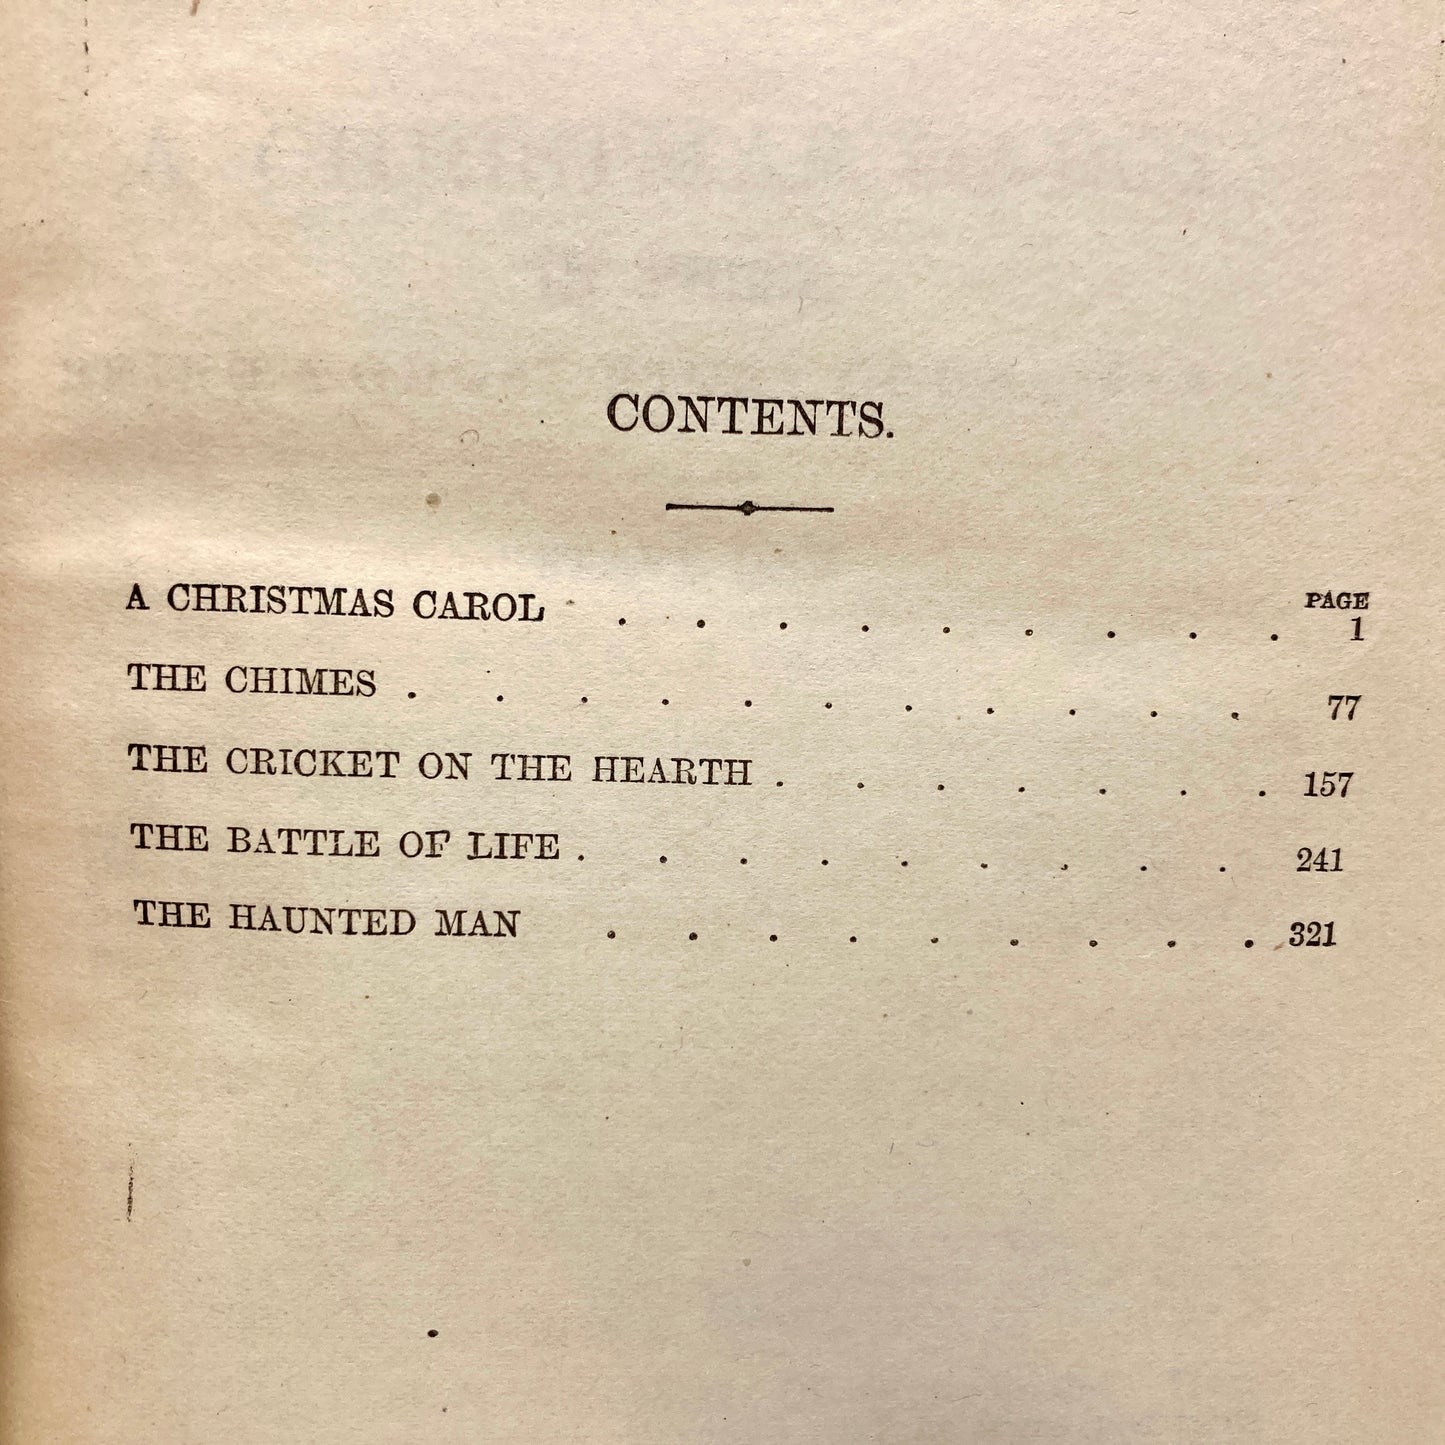 DICKENS, Charles "Christmas Stories/Uncommercial Traveler" [Worthington, 1884]